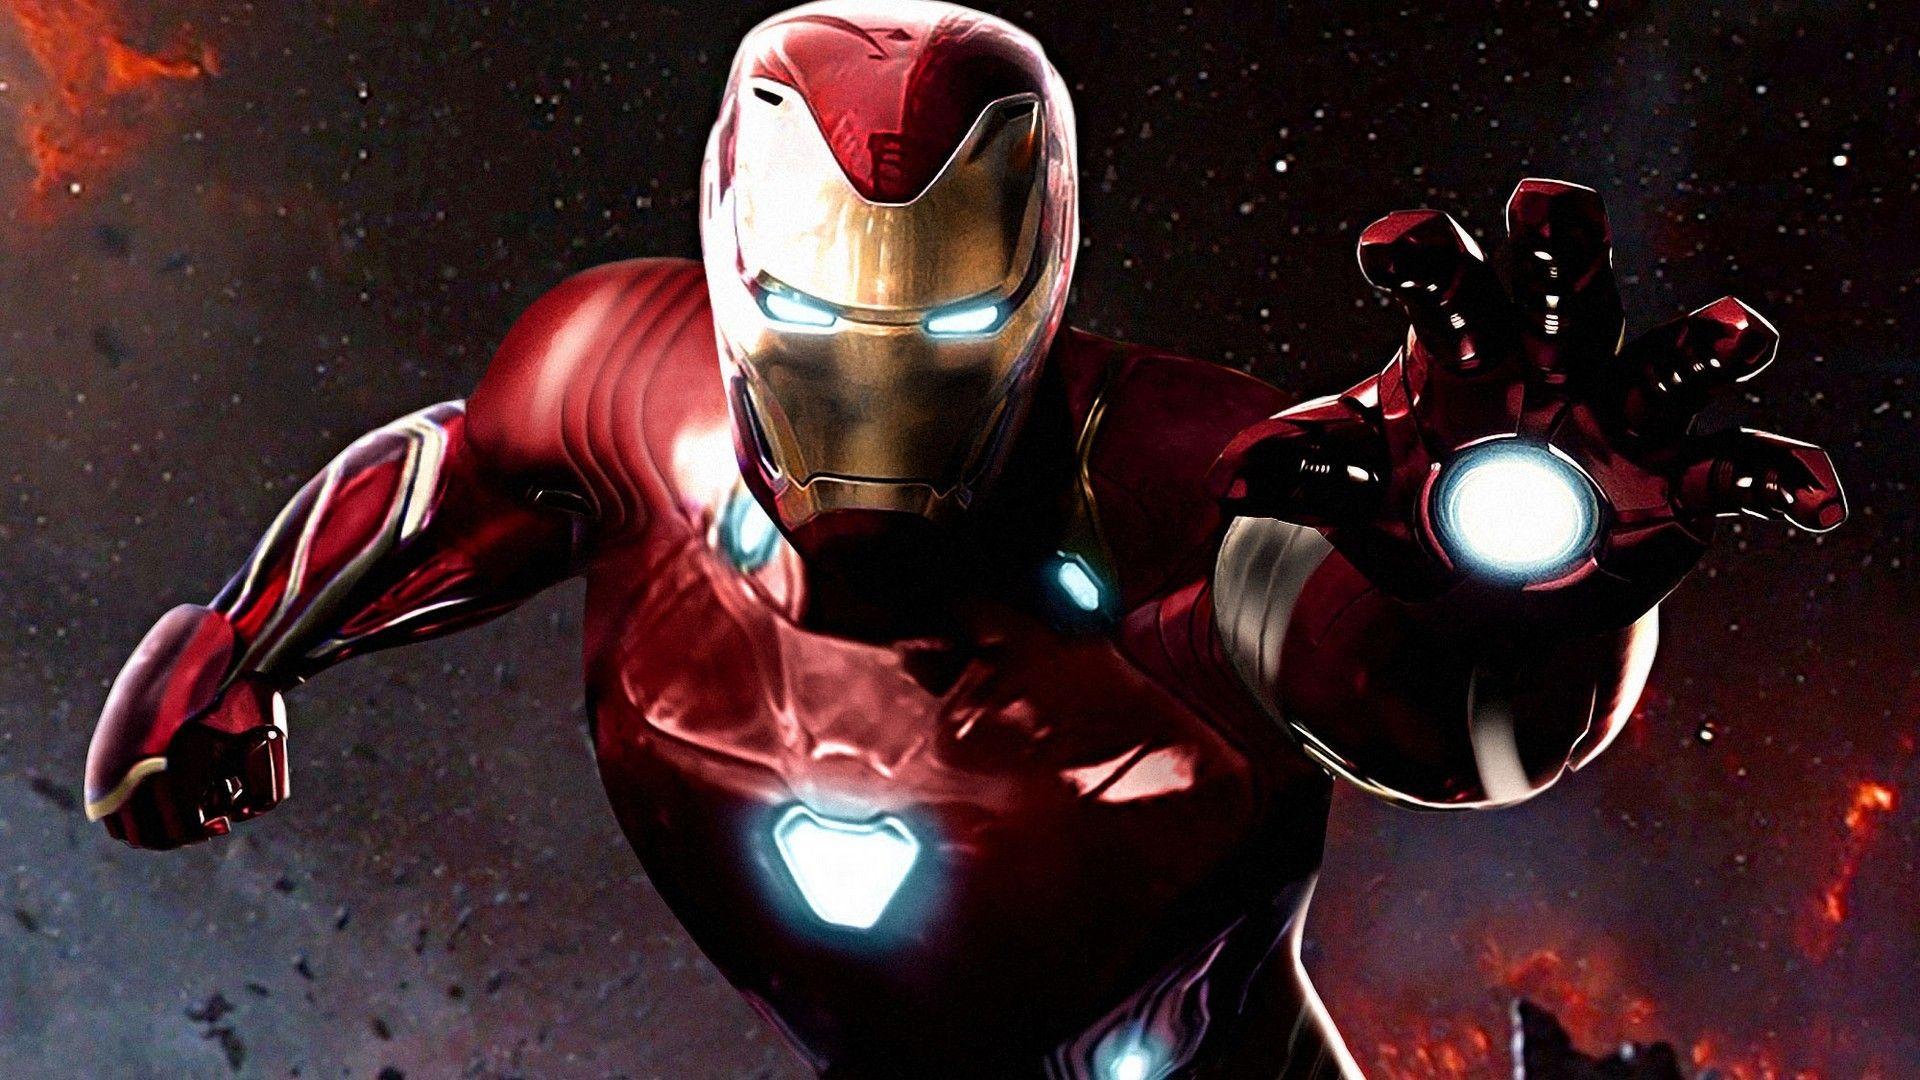 1920x1080 Iron Man Avengers Infinity War hình nền